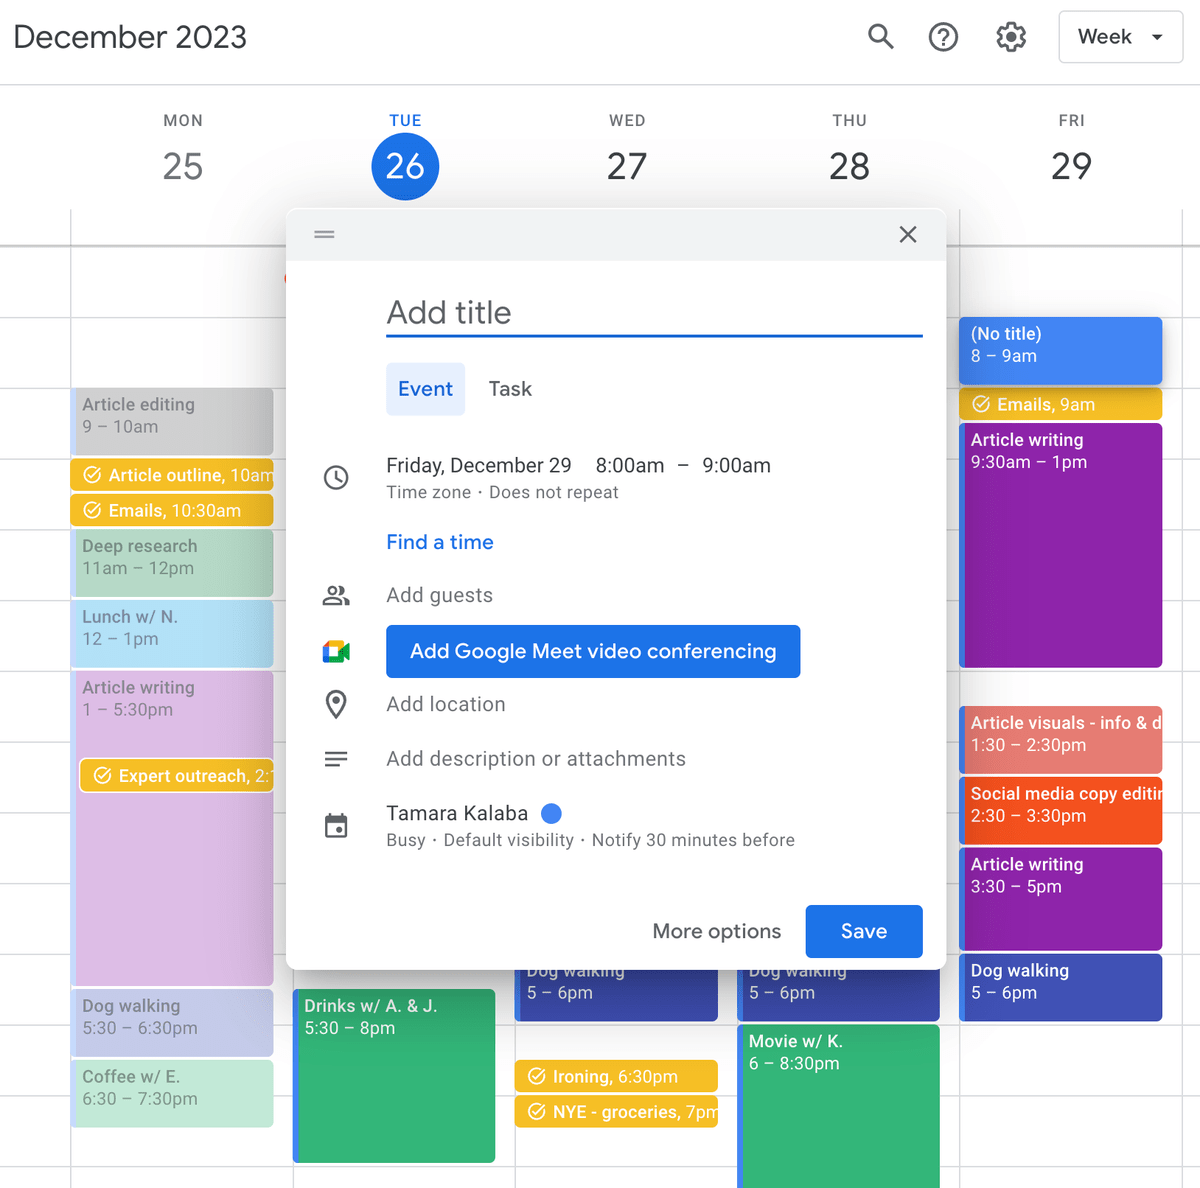 Creating events in Google Calendar